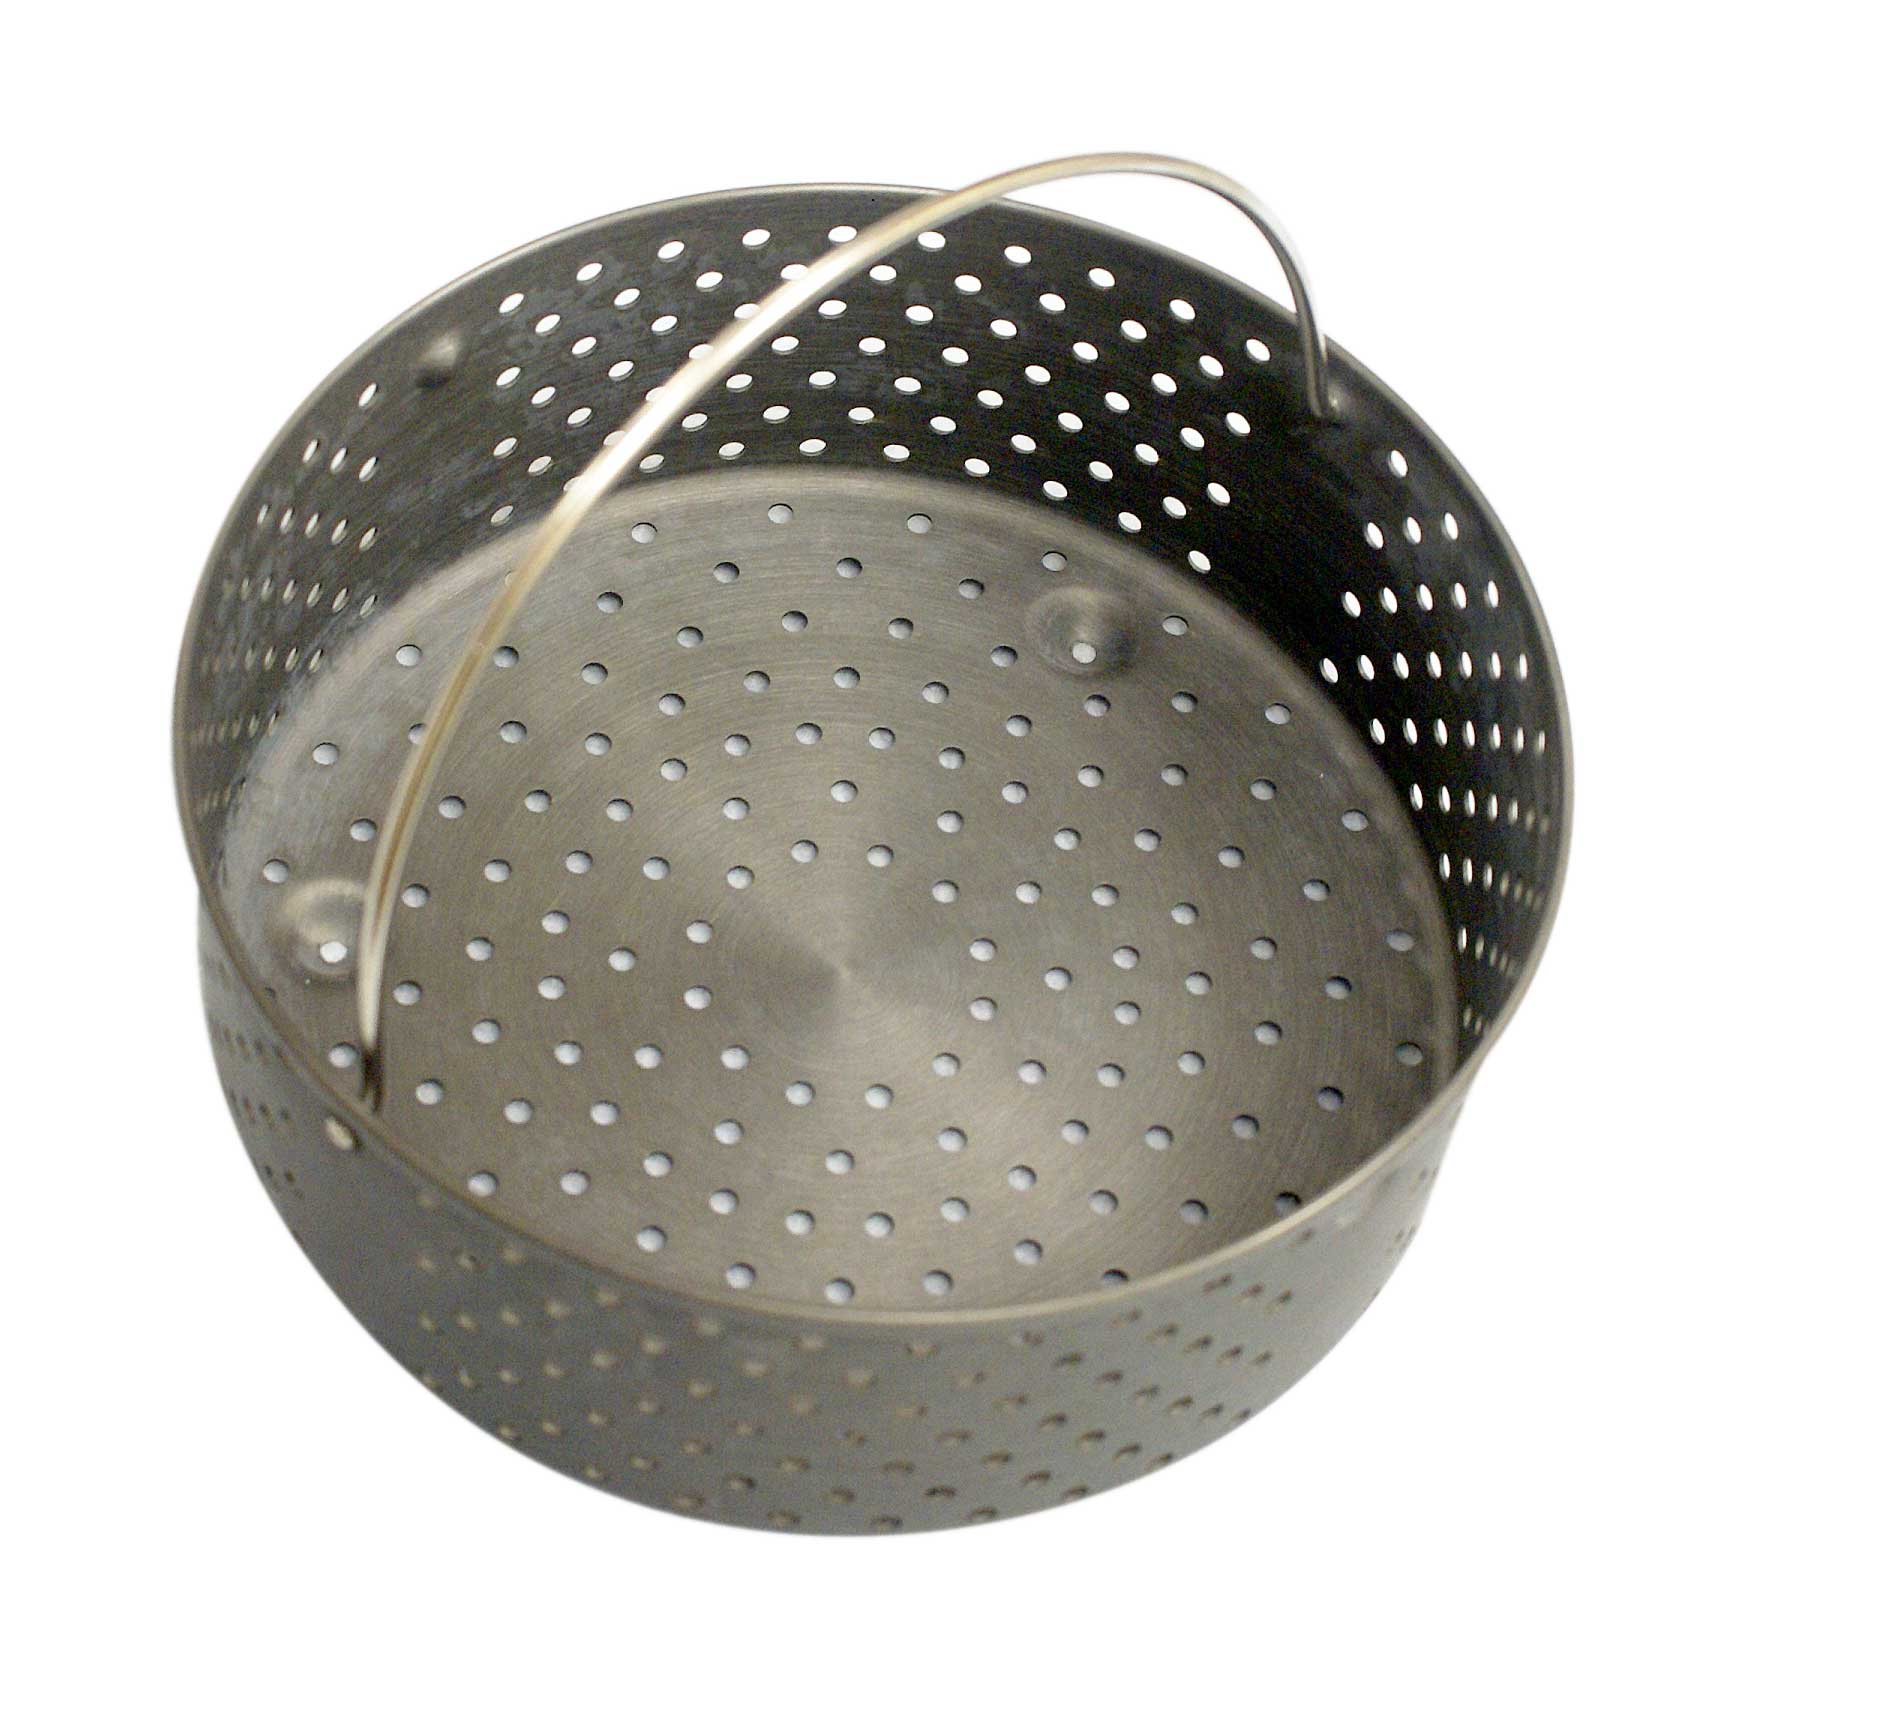 Futura - Steaming Basket 5-9 Liters